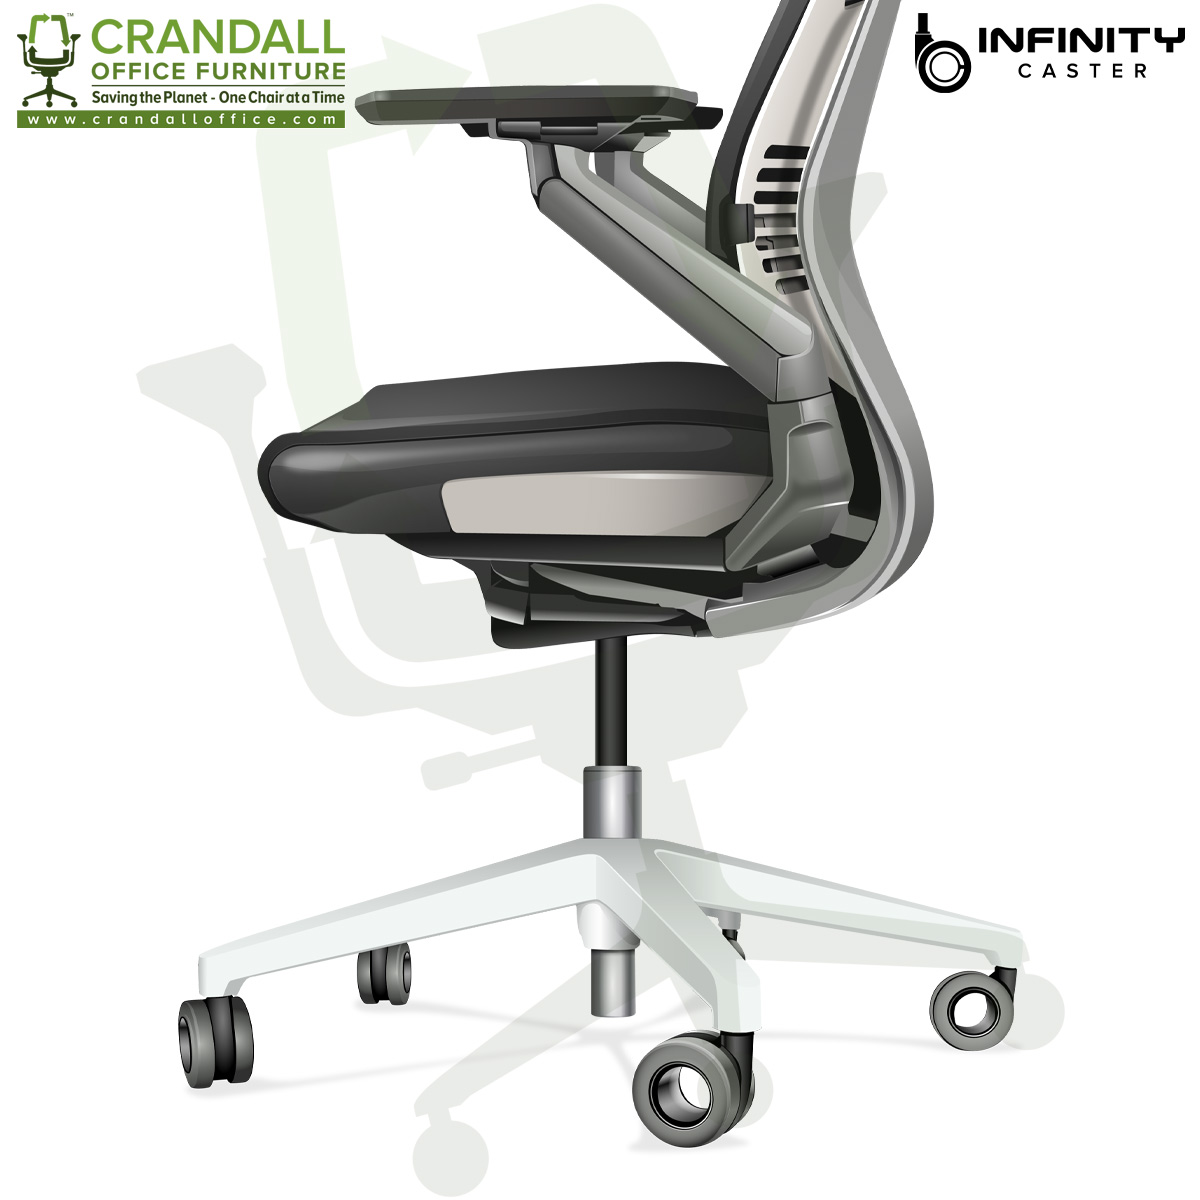 Hard Floor Office Furniture Wheels Chair Universal Castor Replacement Caster 